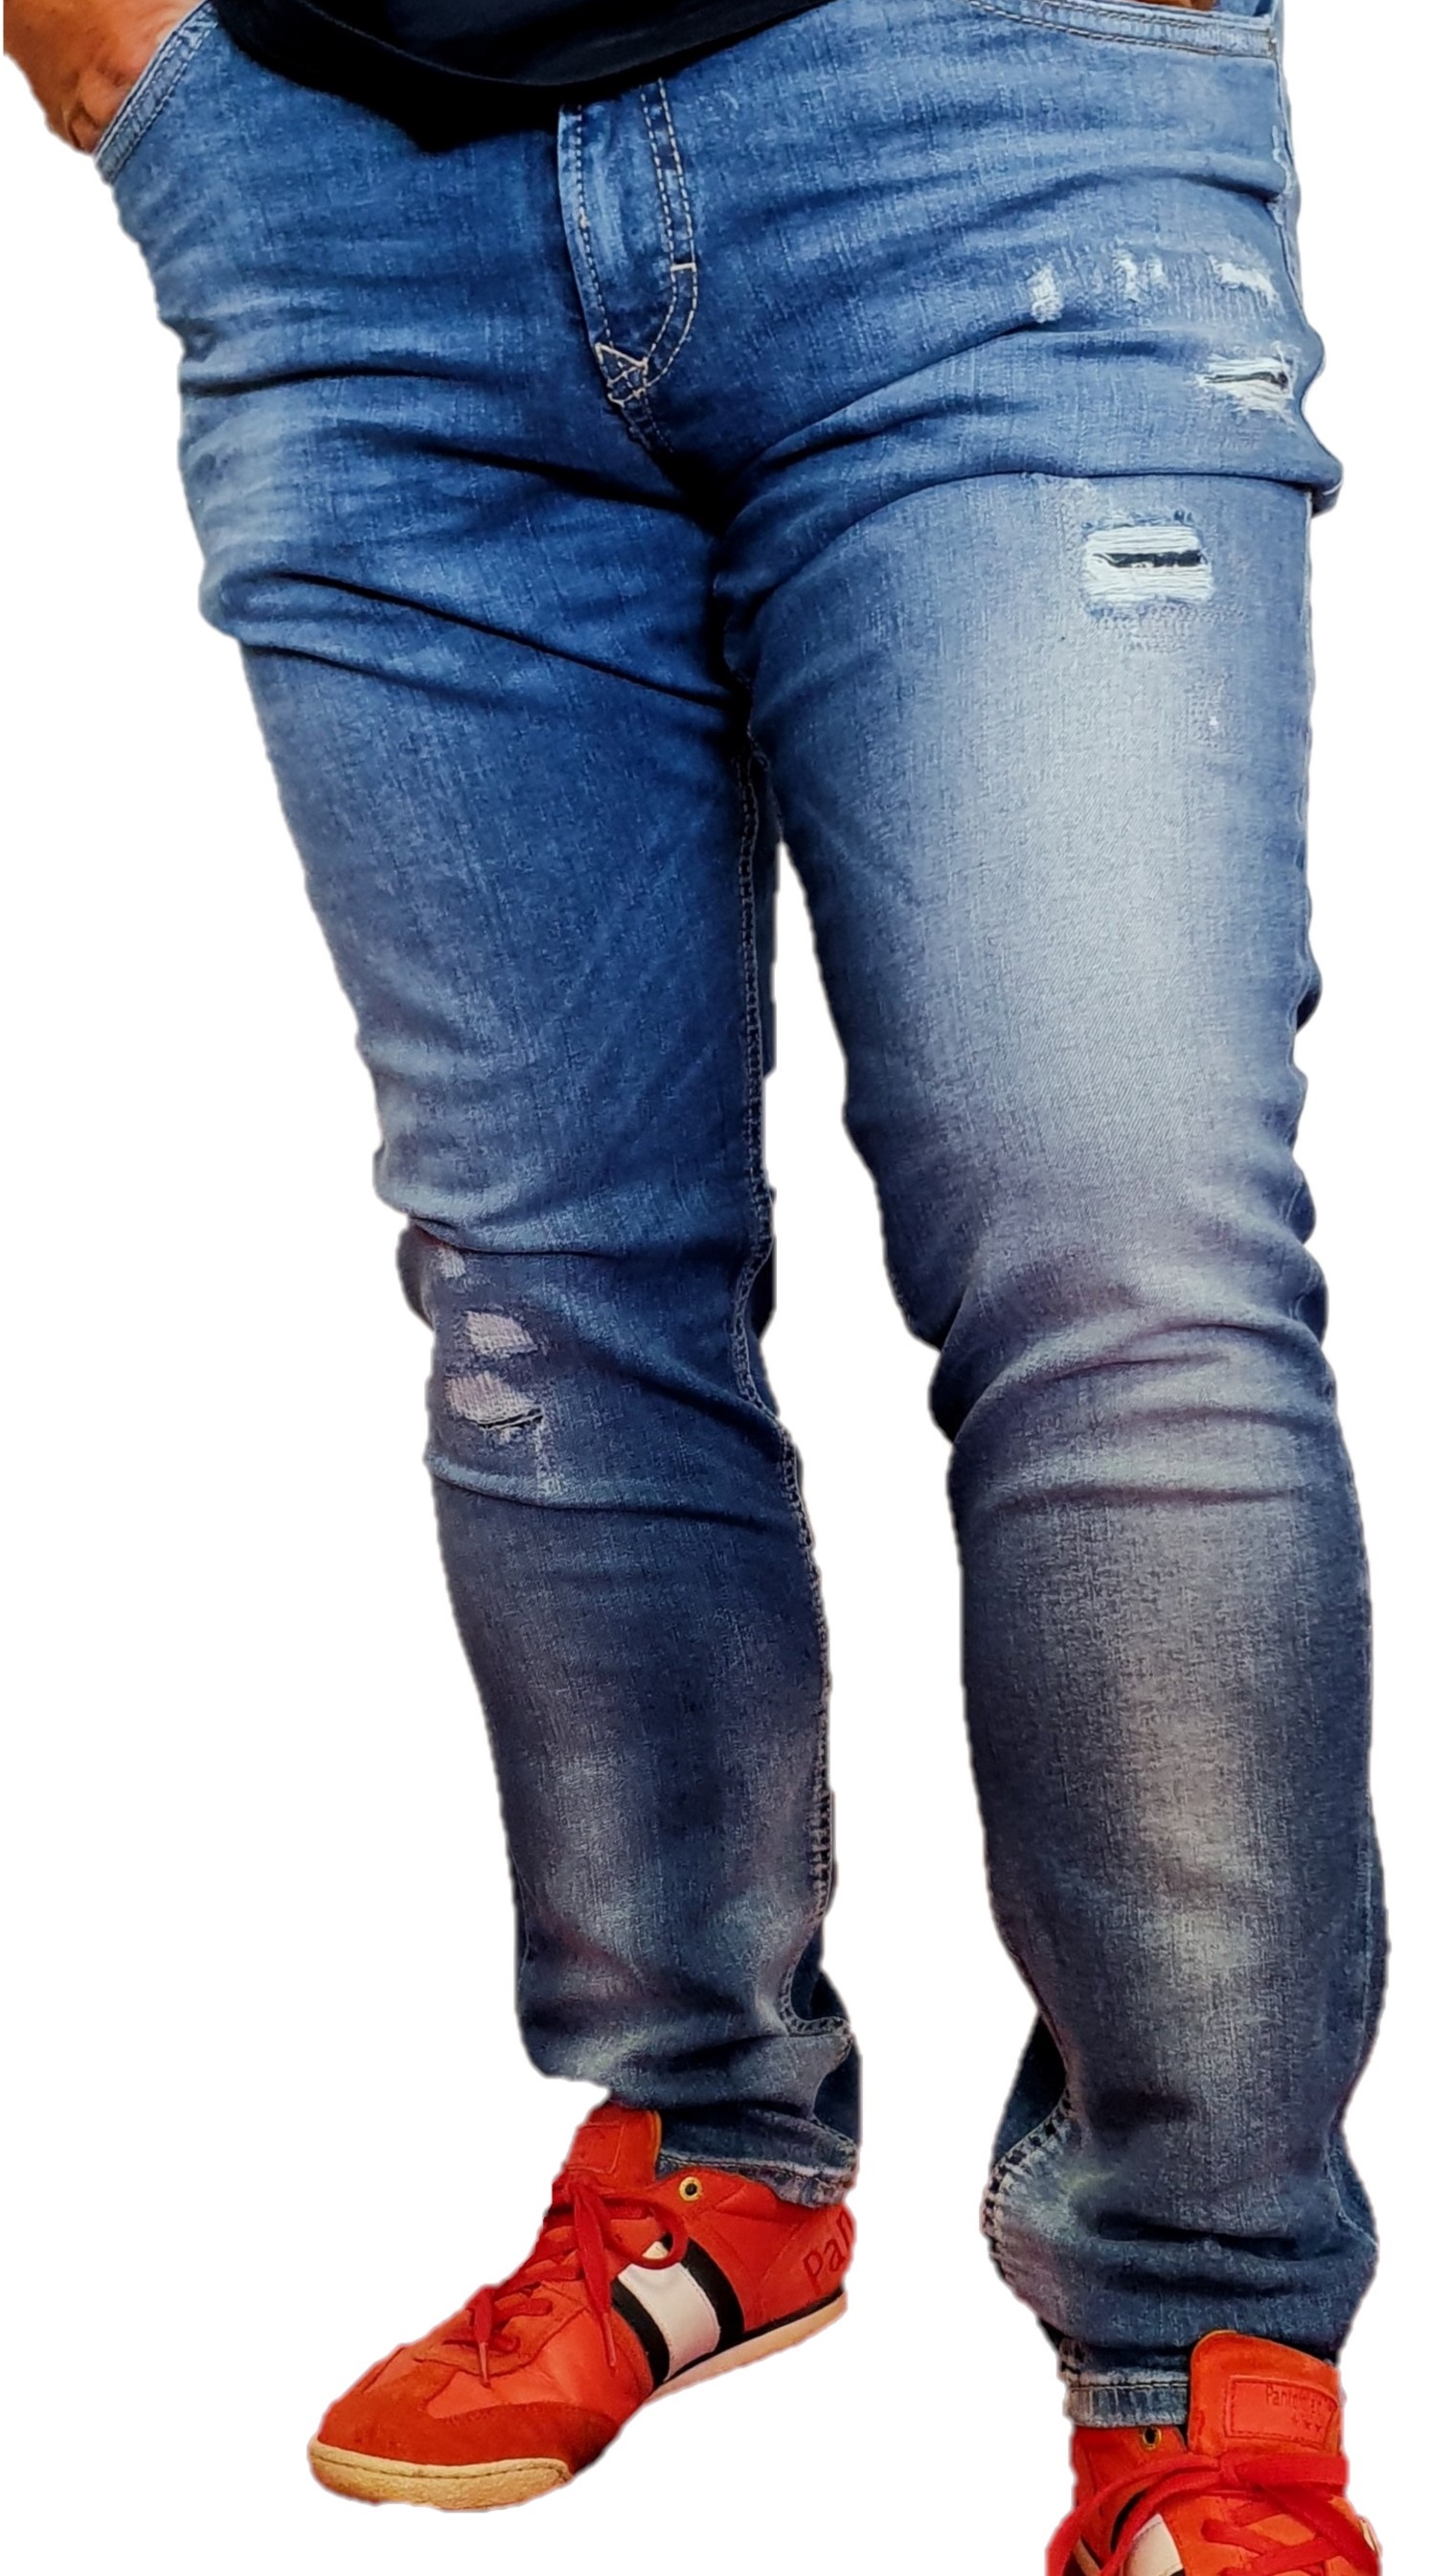 Arne | Pipe, GioMilano authentische Jeans Drivers Jeans, 5-Pocket kernige Herren-Jeans, MAC